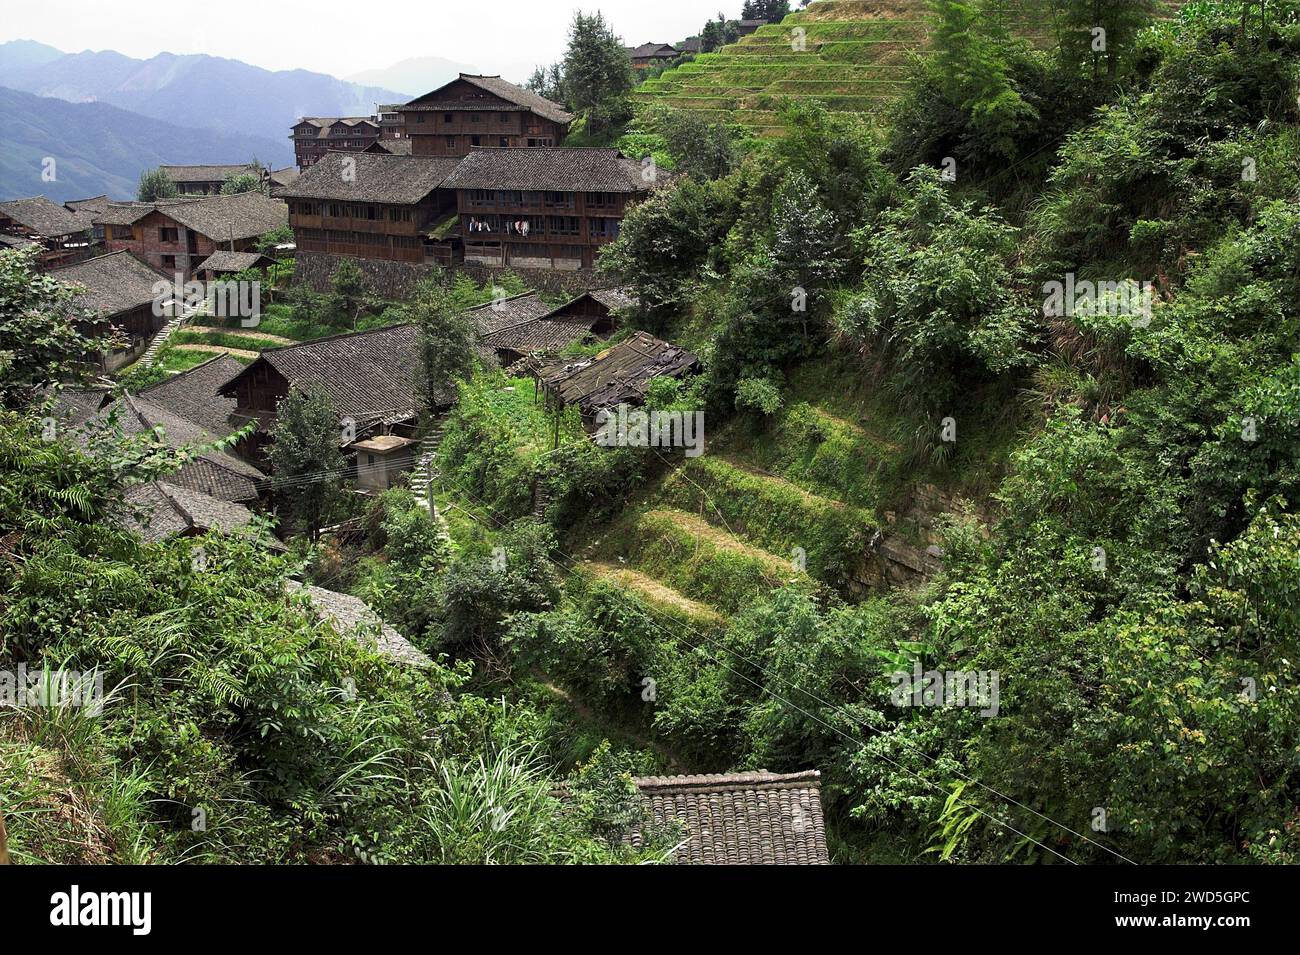 龙胜镇 (龙胜县) 中國 Longsheng Reisterrassen, Dazhai Longji Ping'an Zhuang, China; Chinesisches Dorf in den Bergen Stockfoto